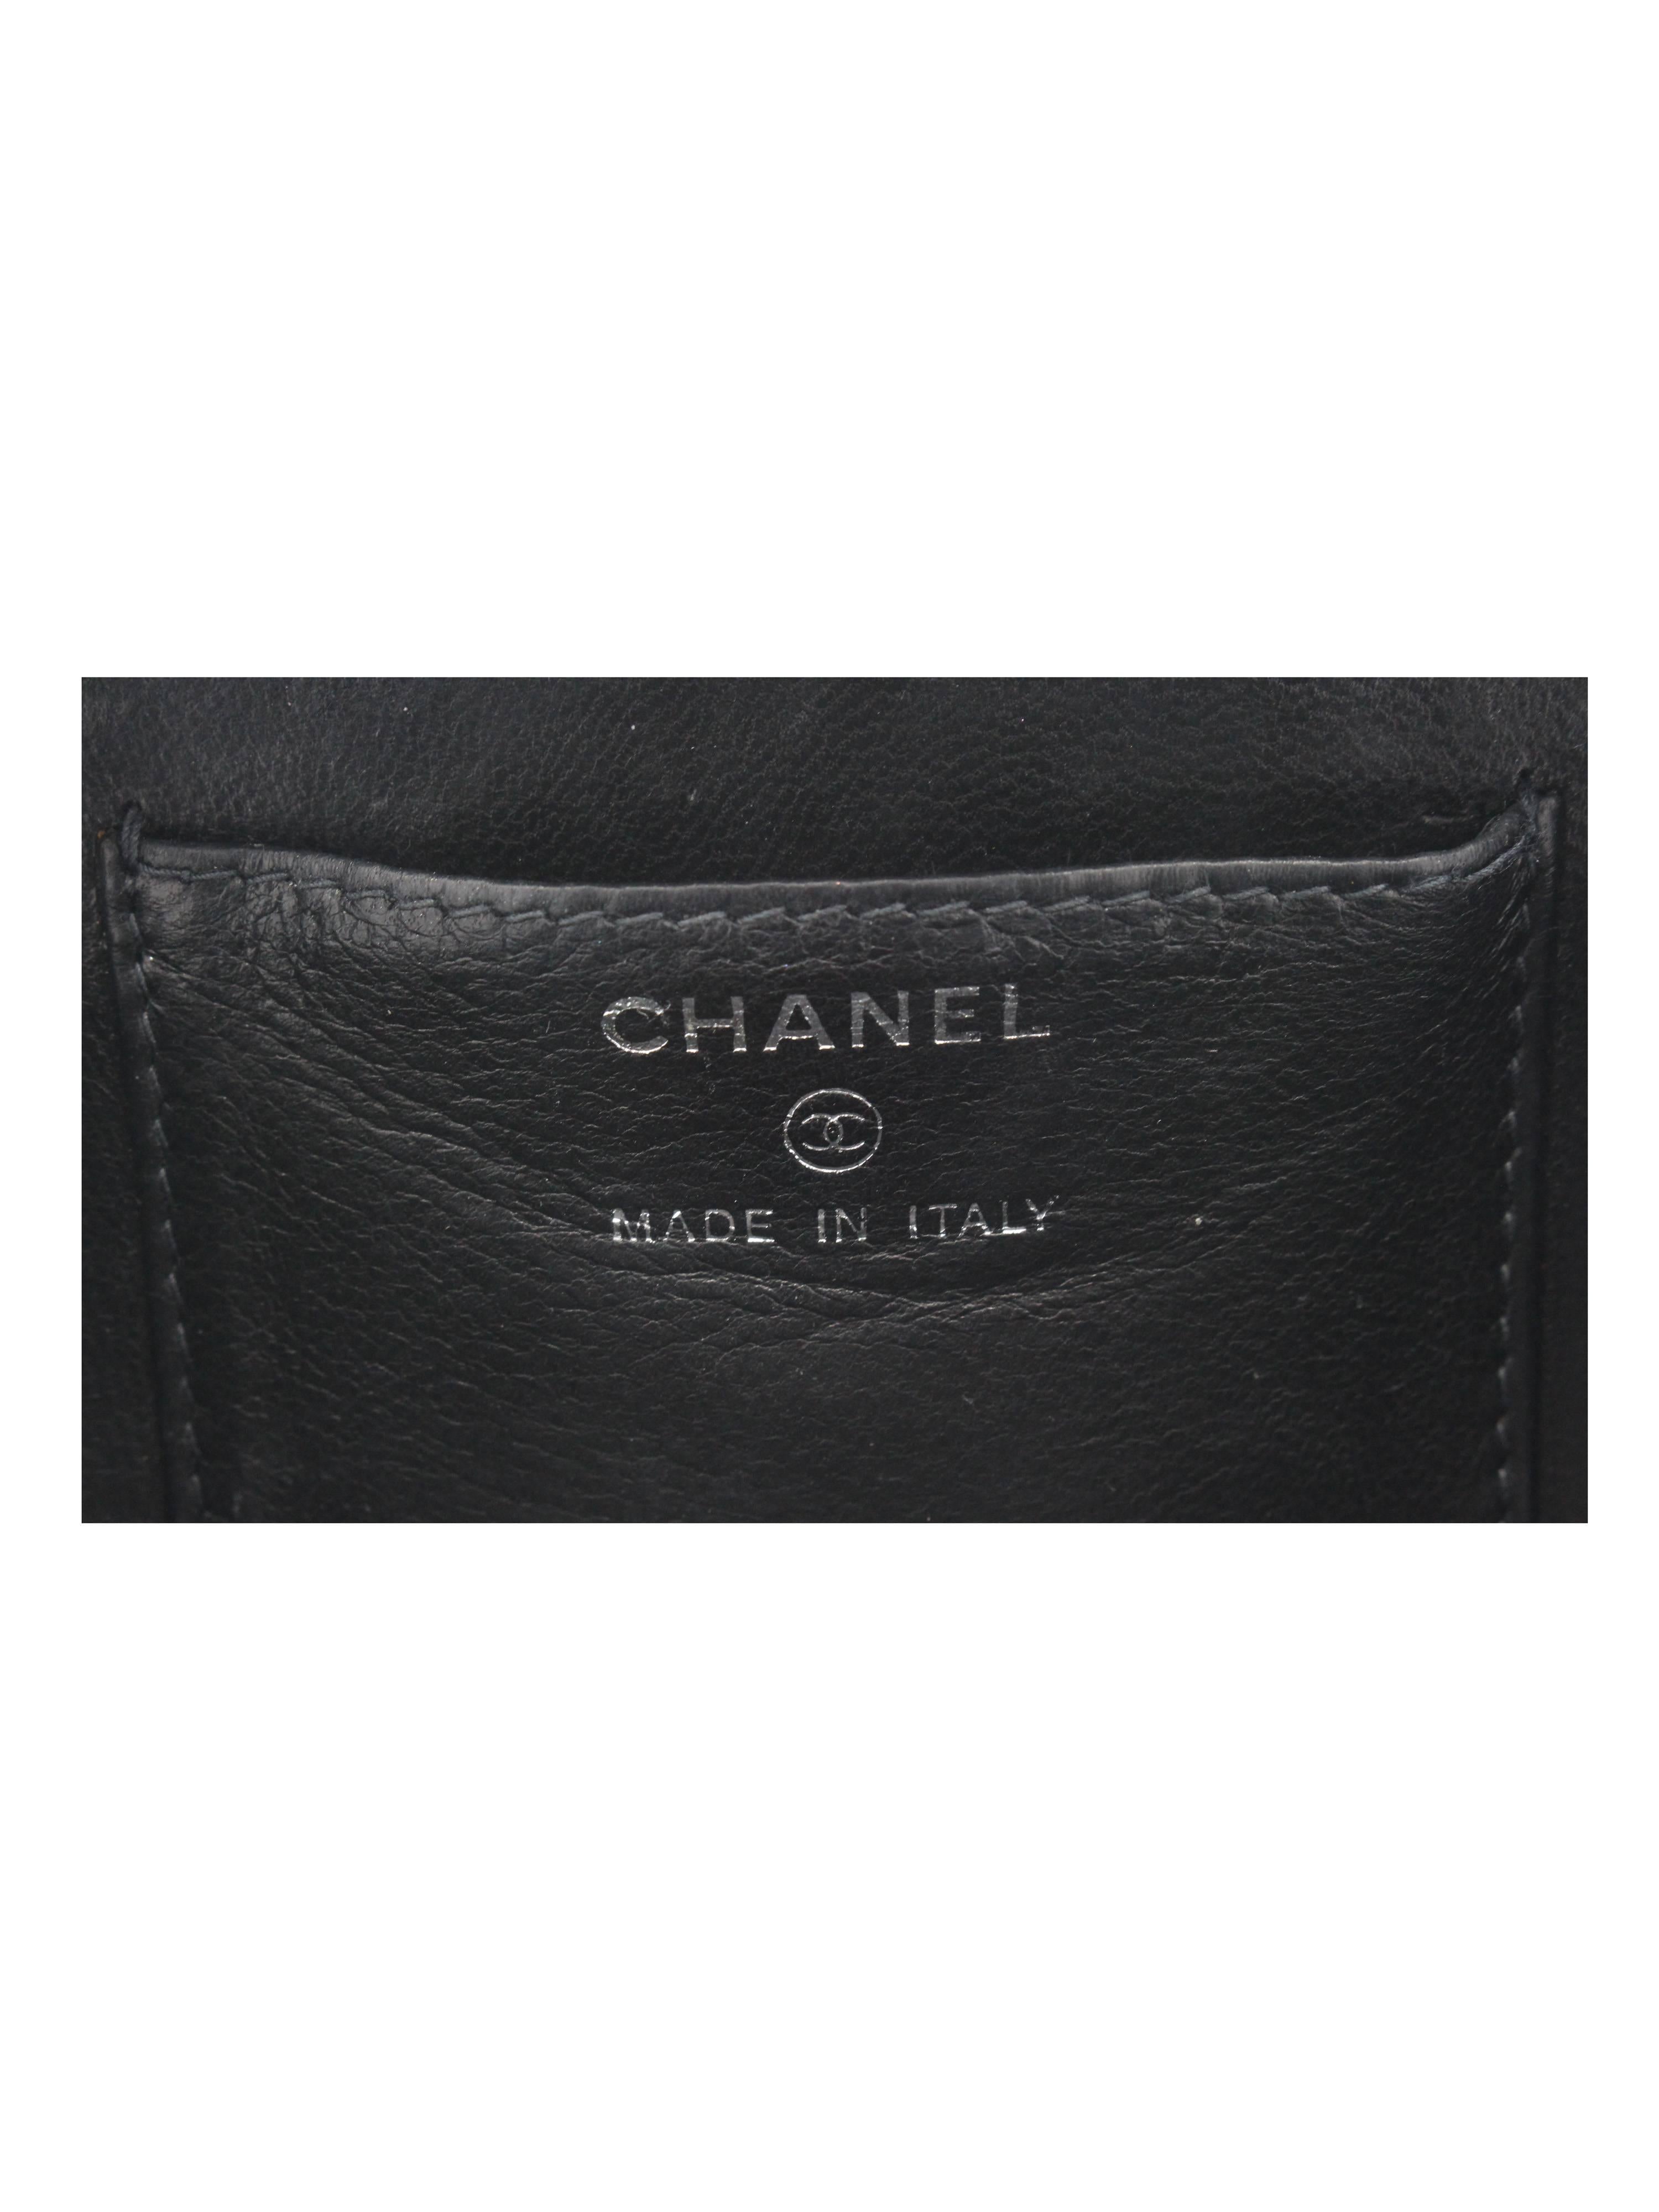 Chanel Black Perspex Lucite Minaudiere Clutch / Chain Wristlet ...